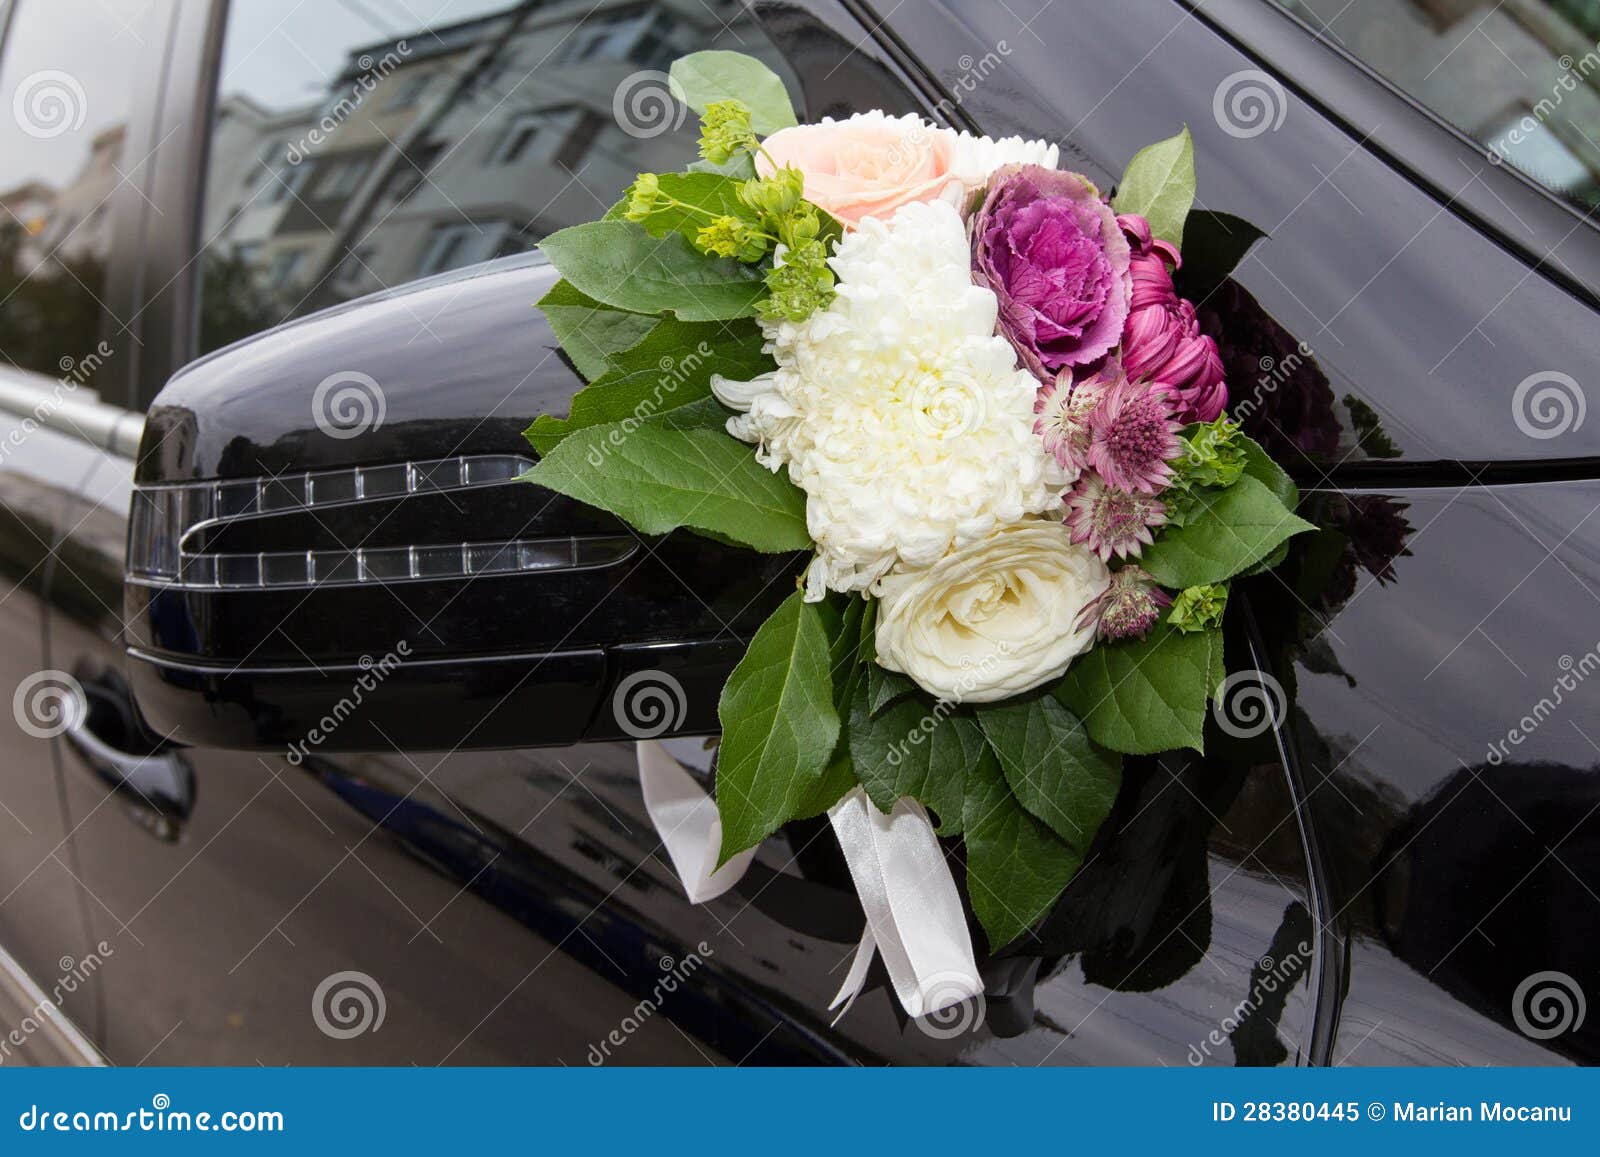 5,495 Wedding Car Decoration Stock Photos - Free & Royalty-Free